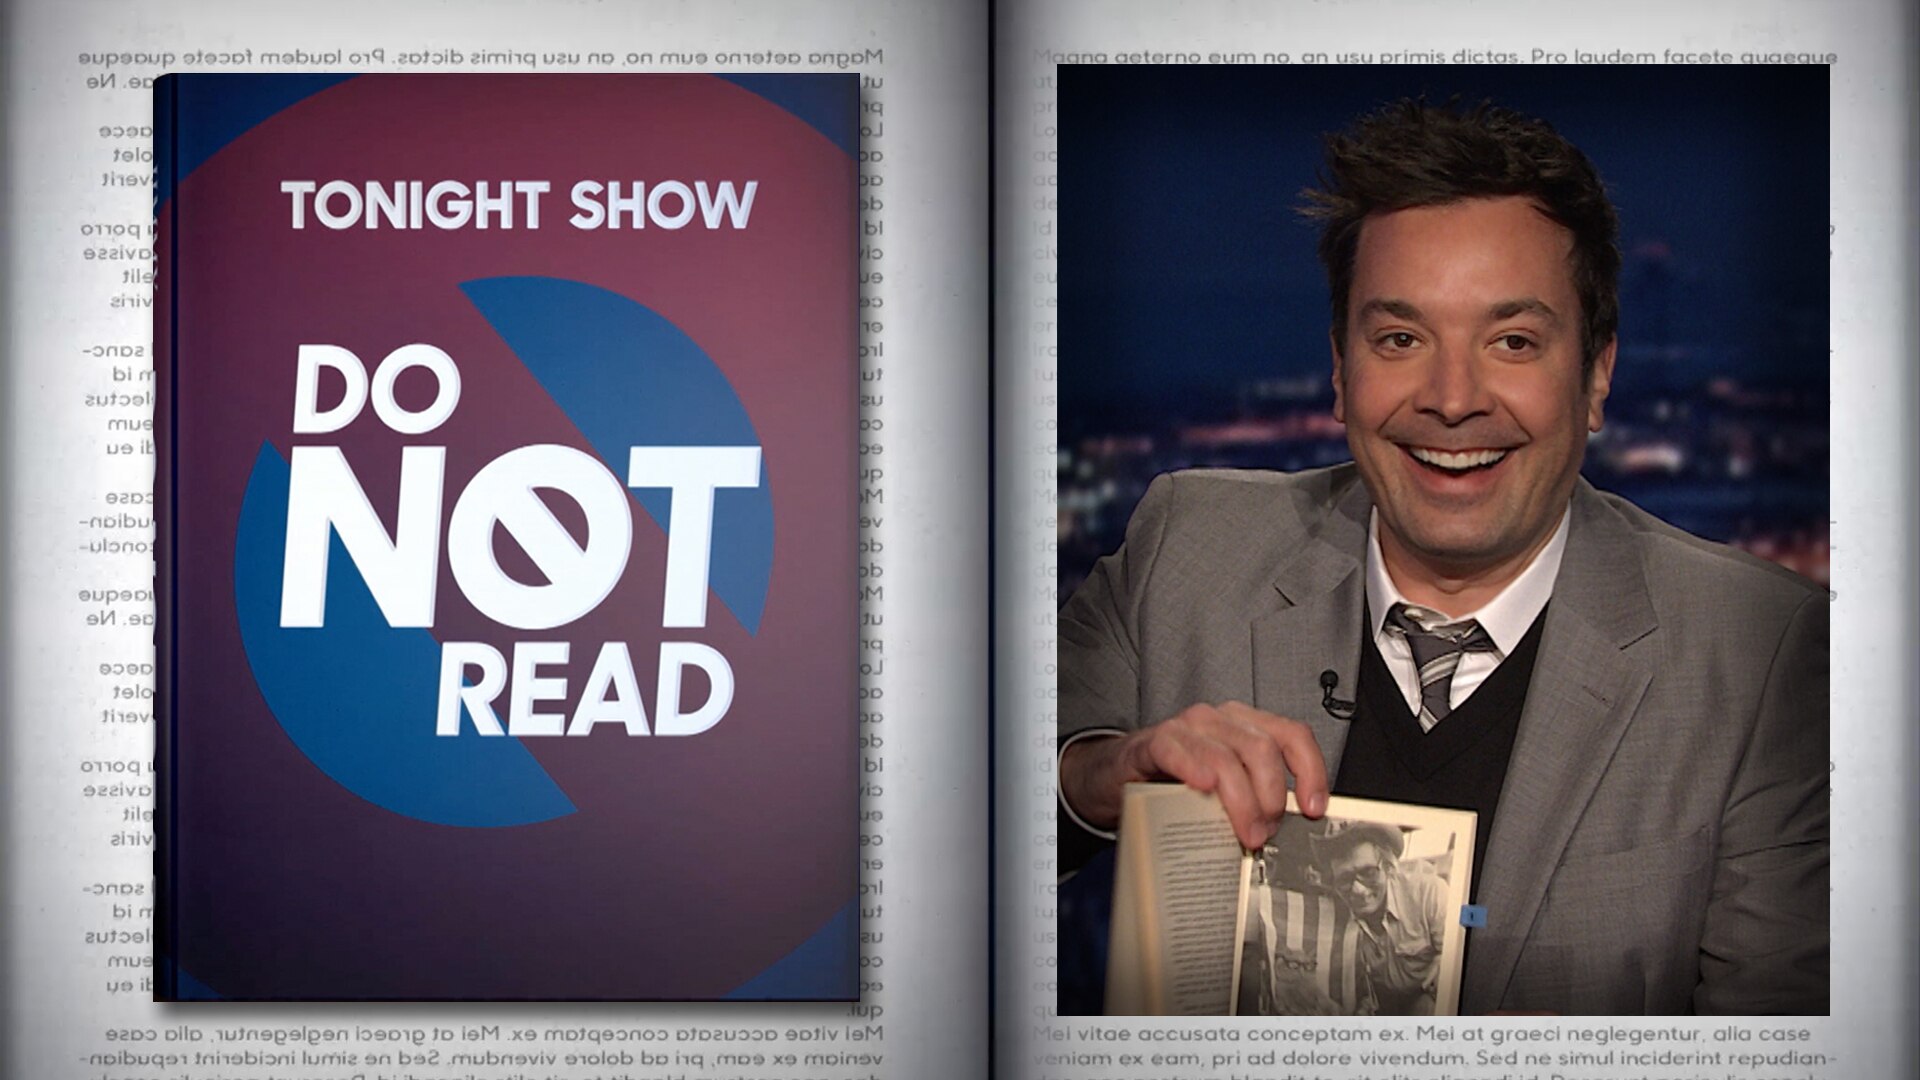 Watch The Tonight Show Starring Jimmy Fallon Highlight Do Not Read